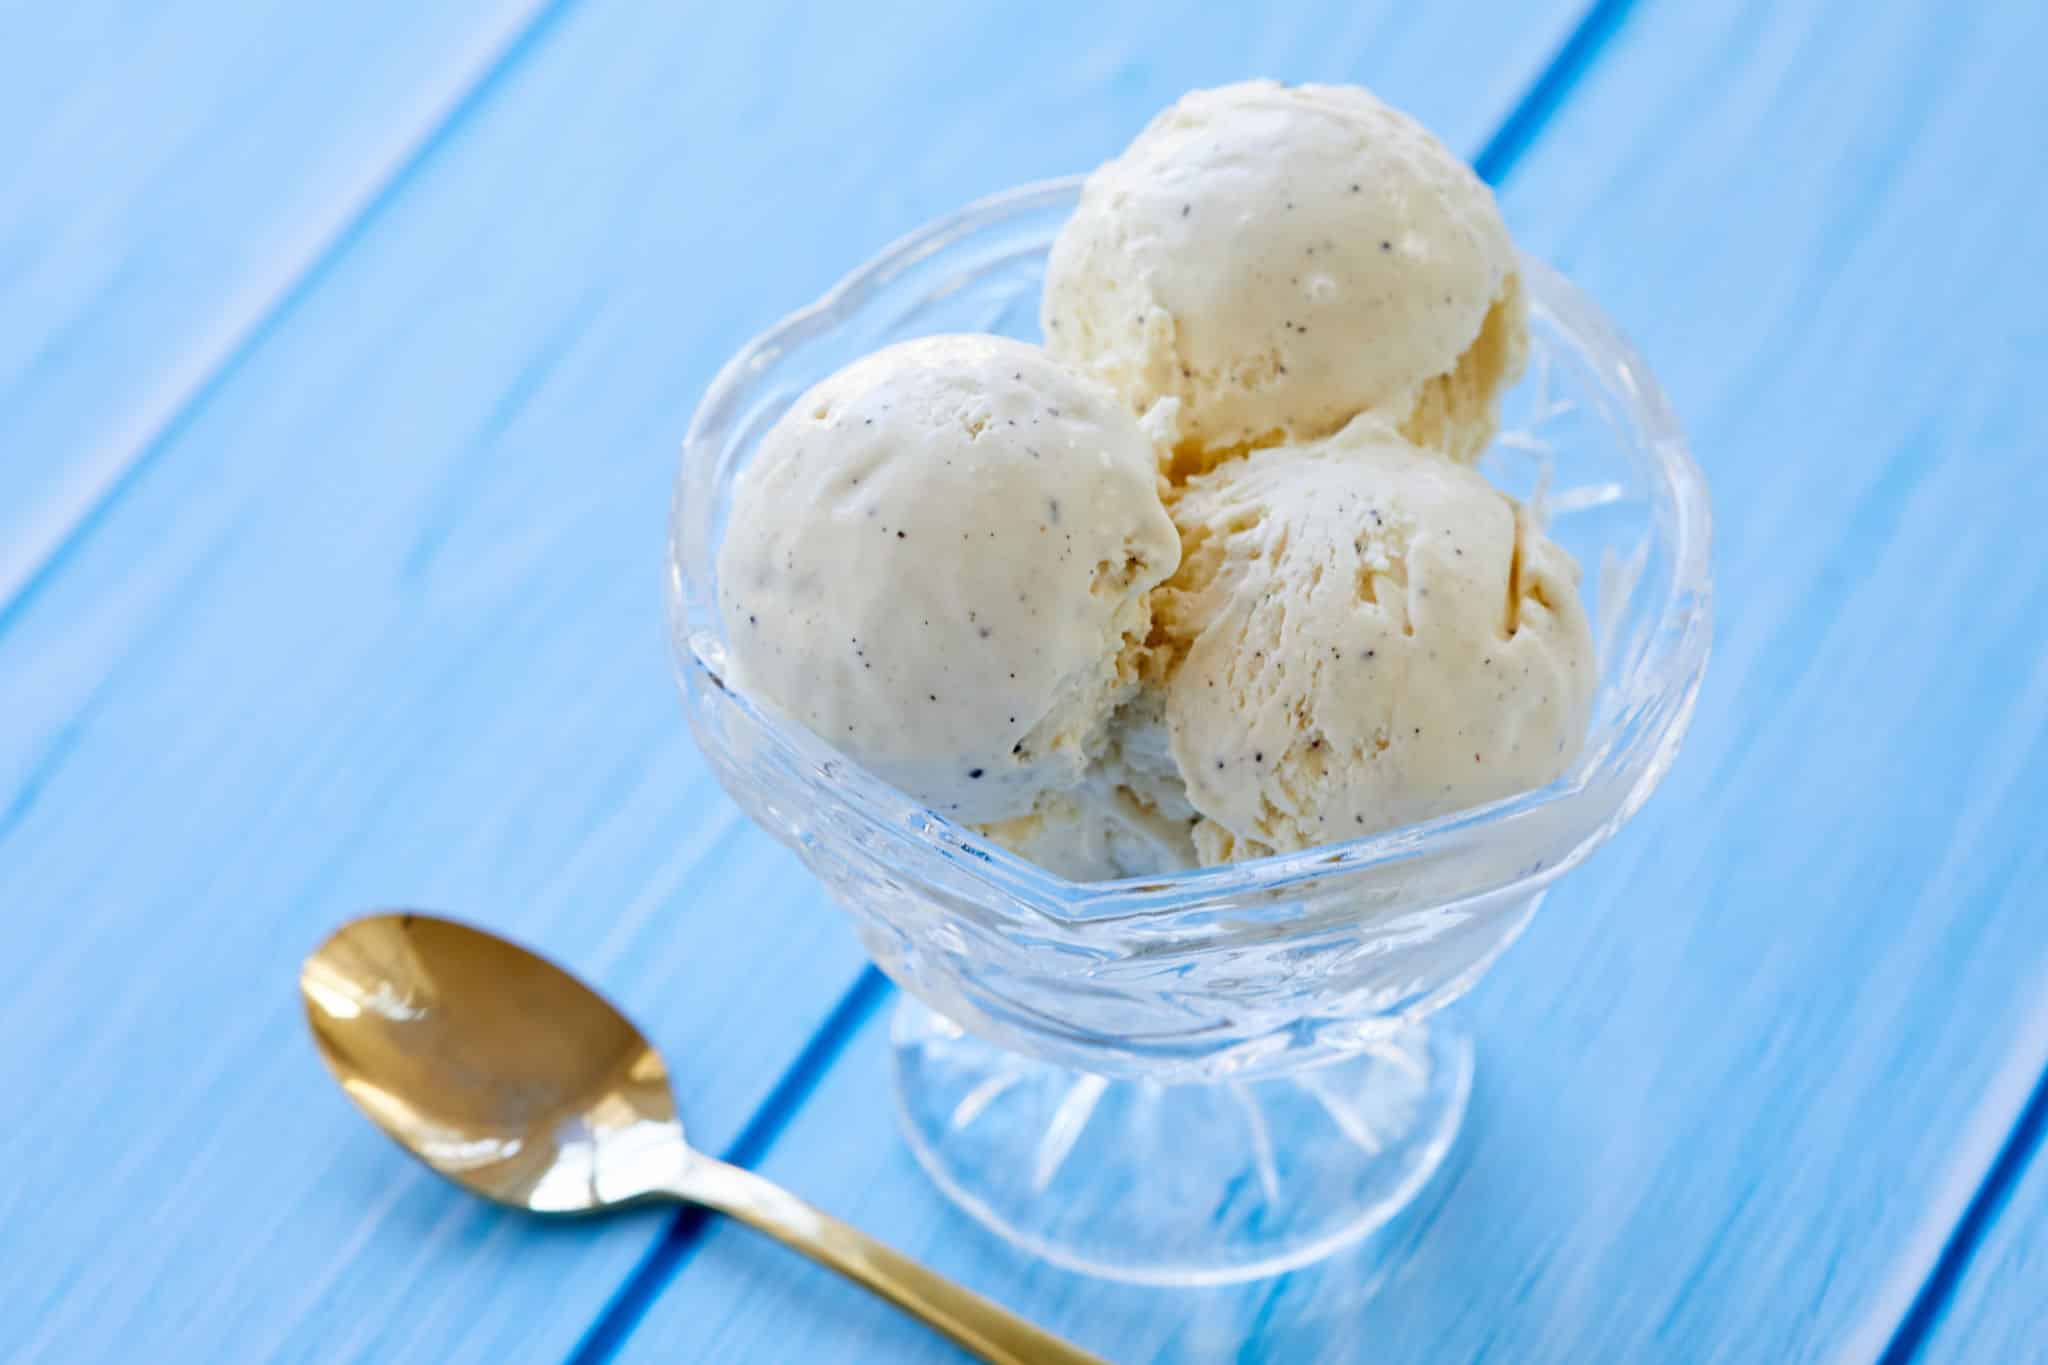 https://www.biggerbolderbaking.com/wp-content/uploads/2018/05/Vanilla-2-Ingredient-Ice-cream-scaled.jpg